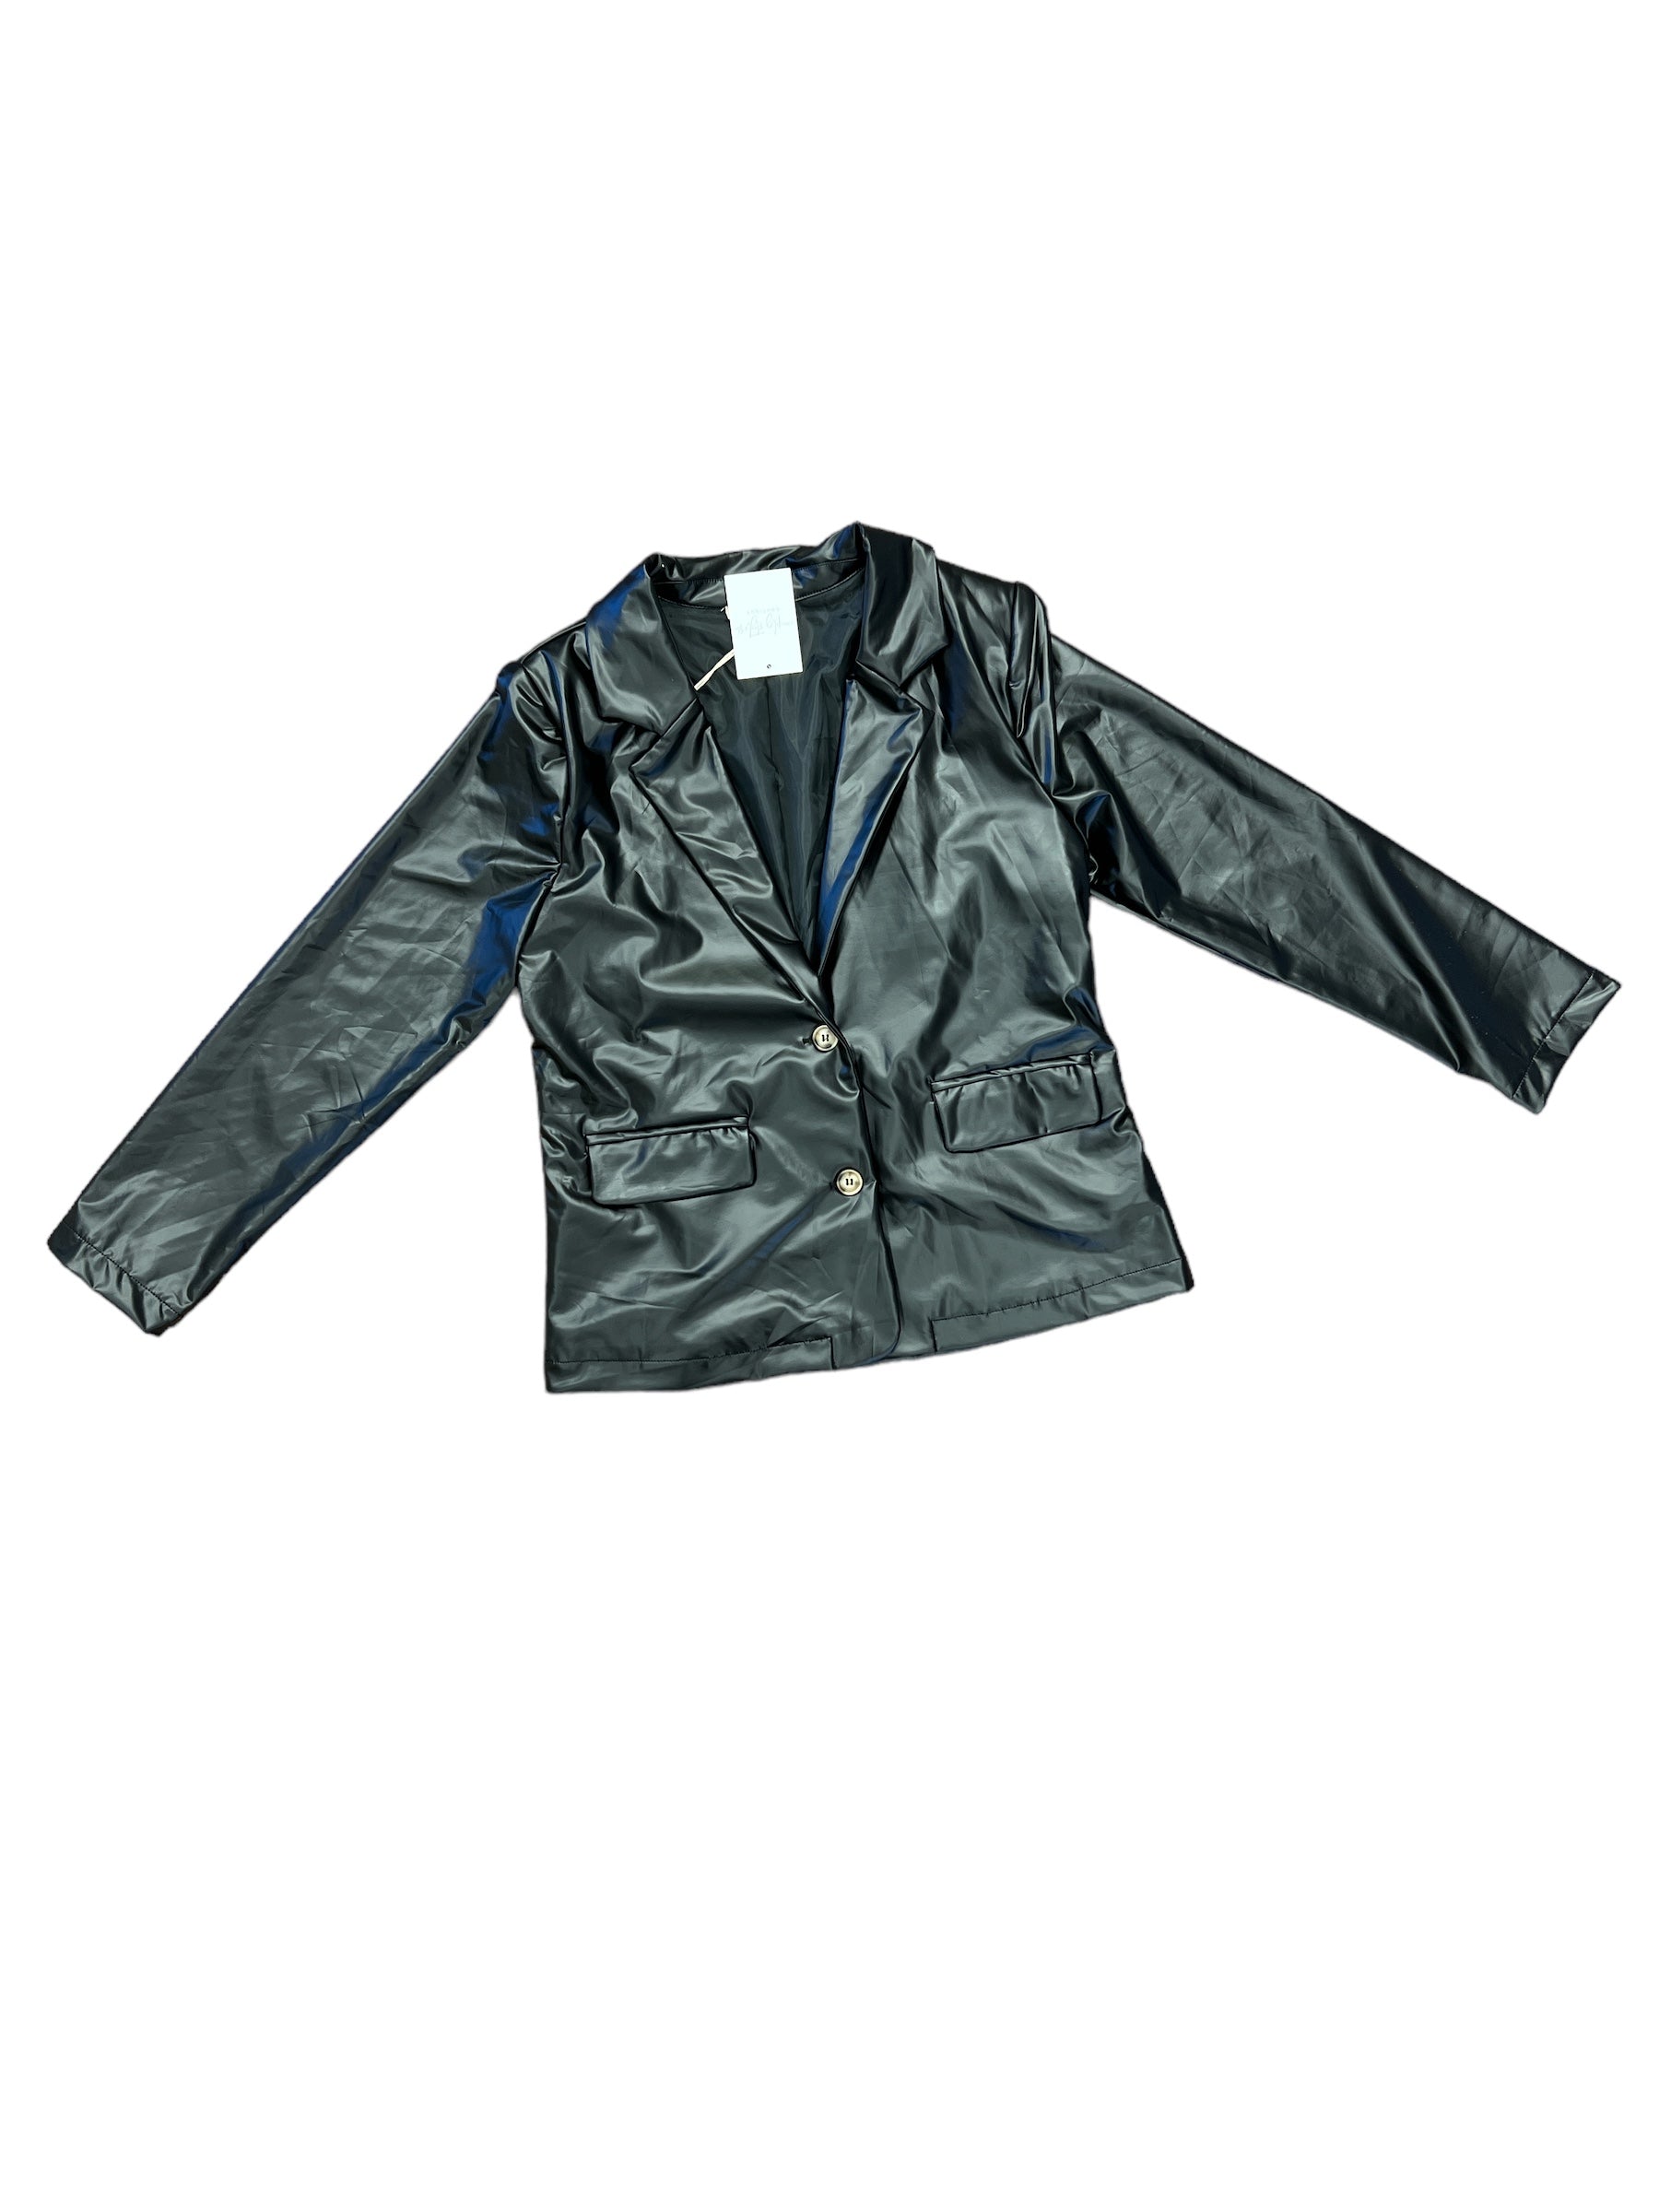 Charlie Jacket-150 Jackets, Blazers, & Outerwear-Simply Stylish Boutique-Simply Stylish Boutique | Women’s & Kid’s Fashion | Paducah, KY